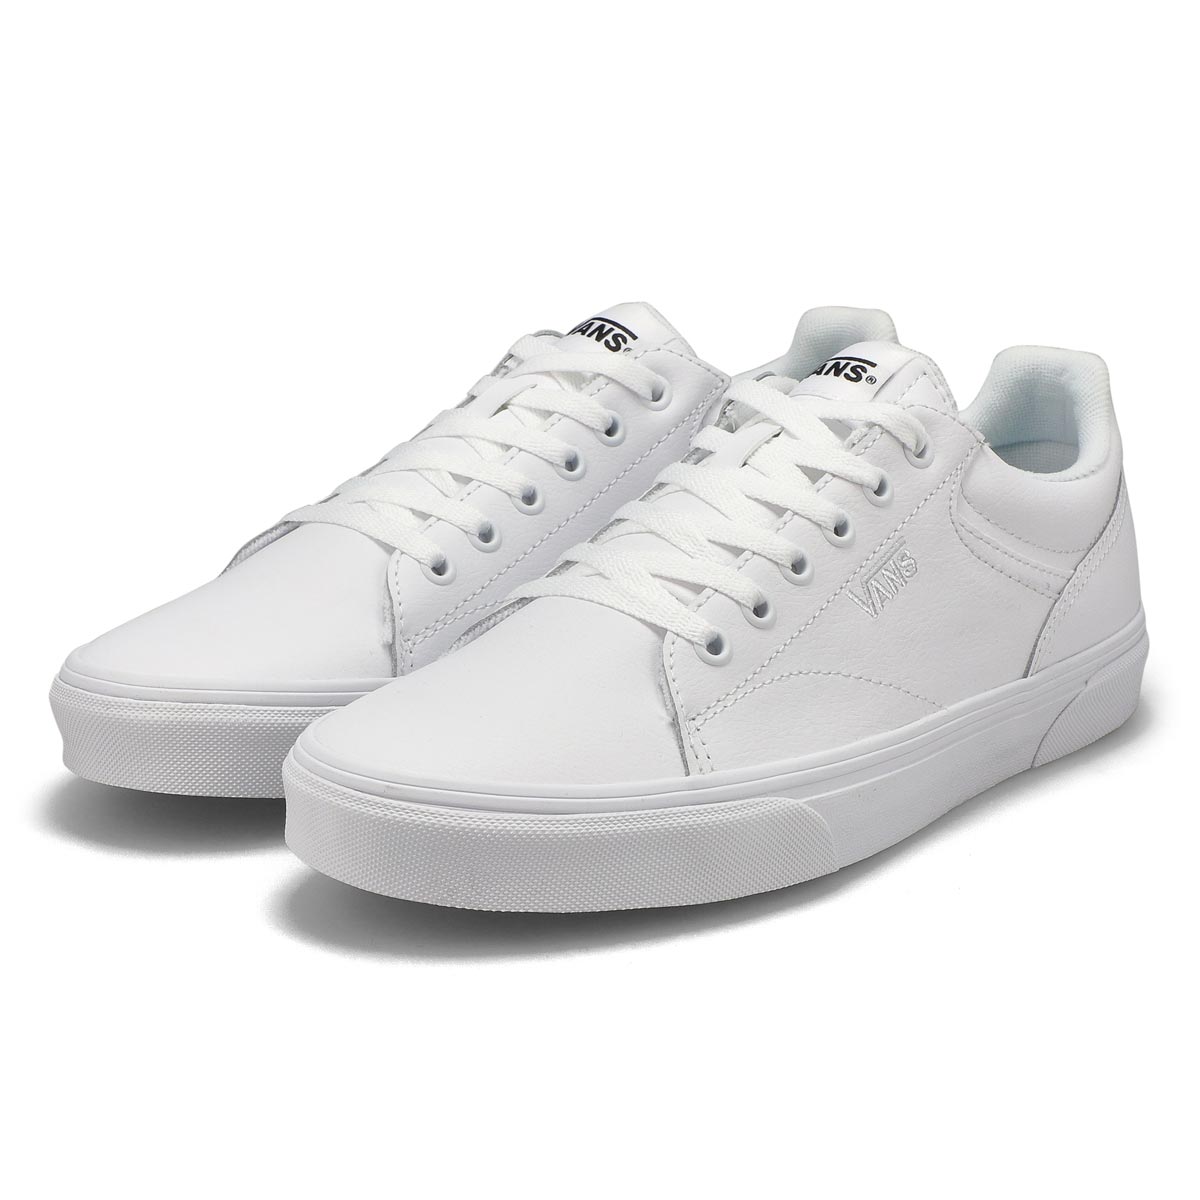 Men's Seldan Leather Lace Up Sneaker - White/White